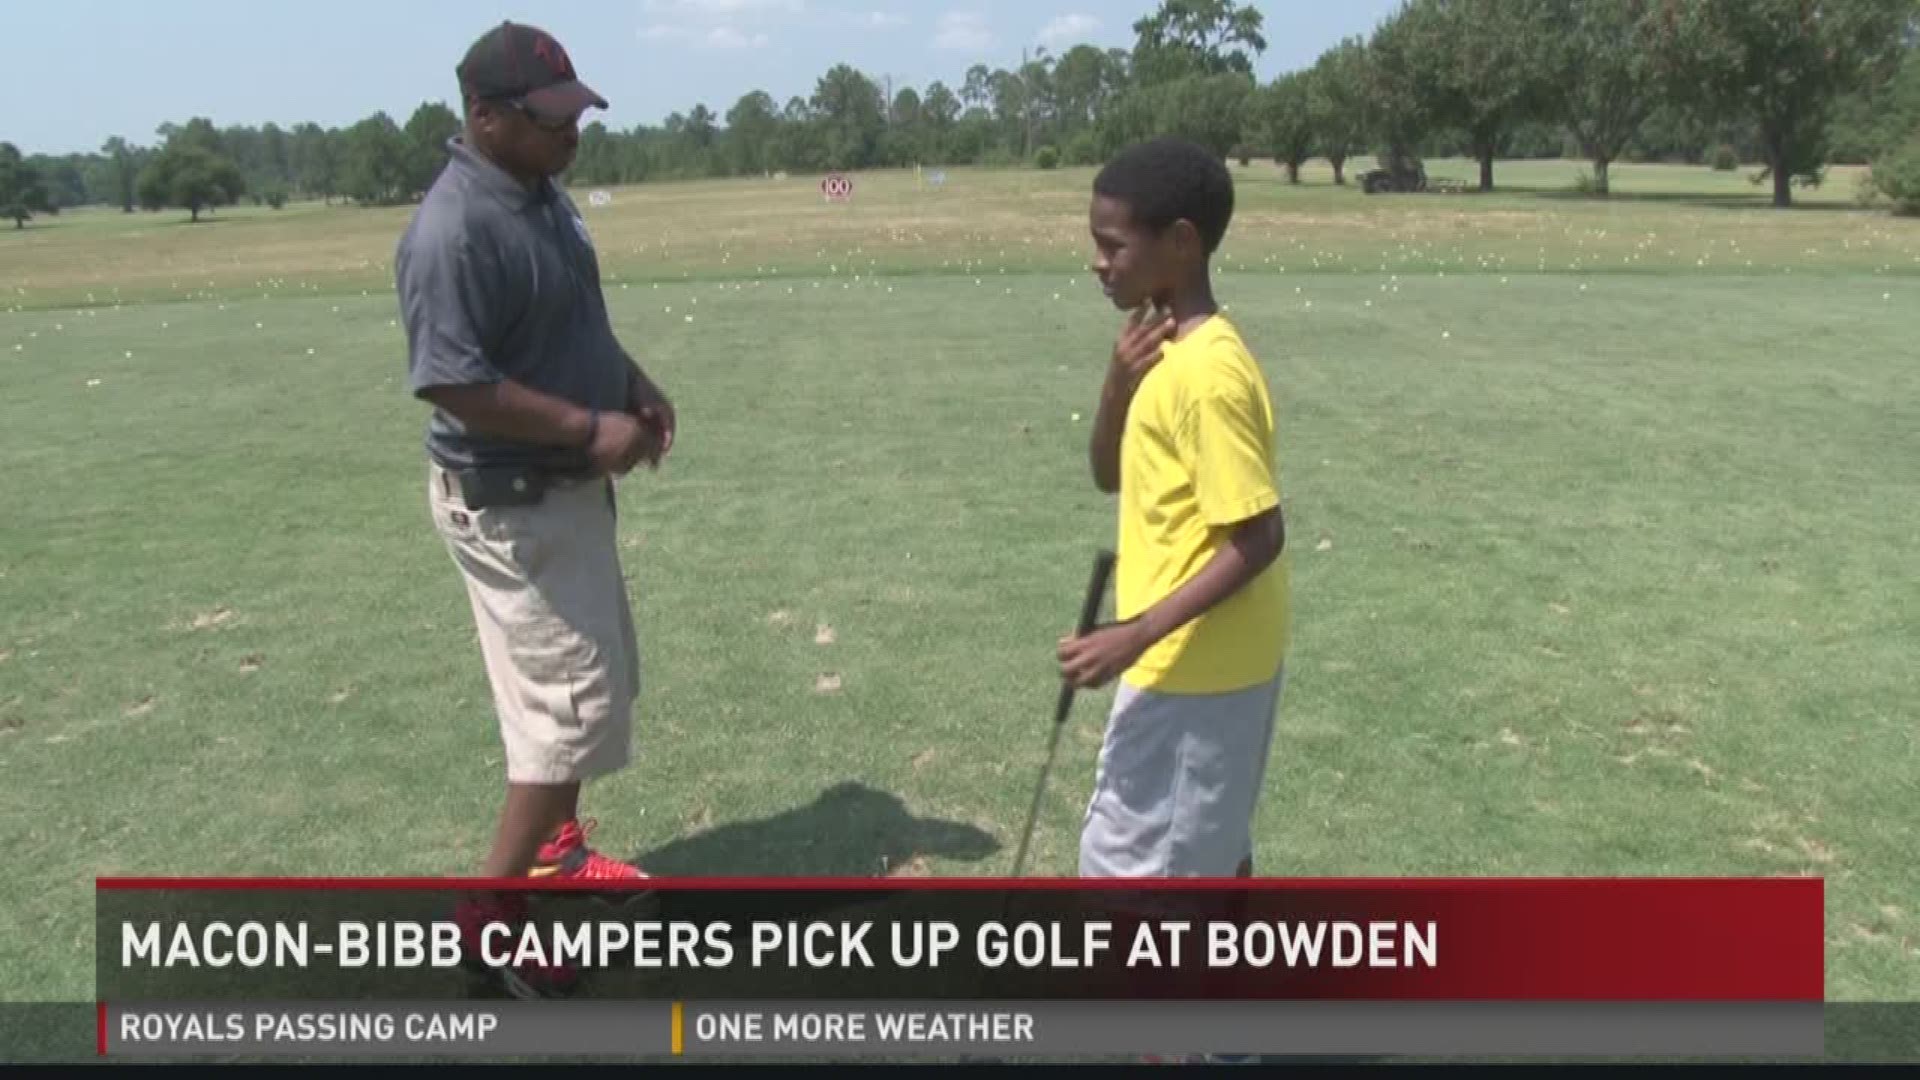 Macon-Bibb campers pick up golf at Bowden